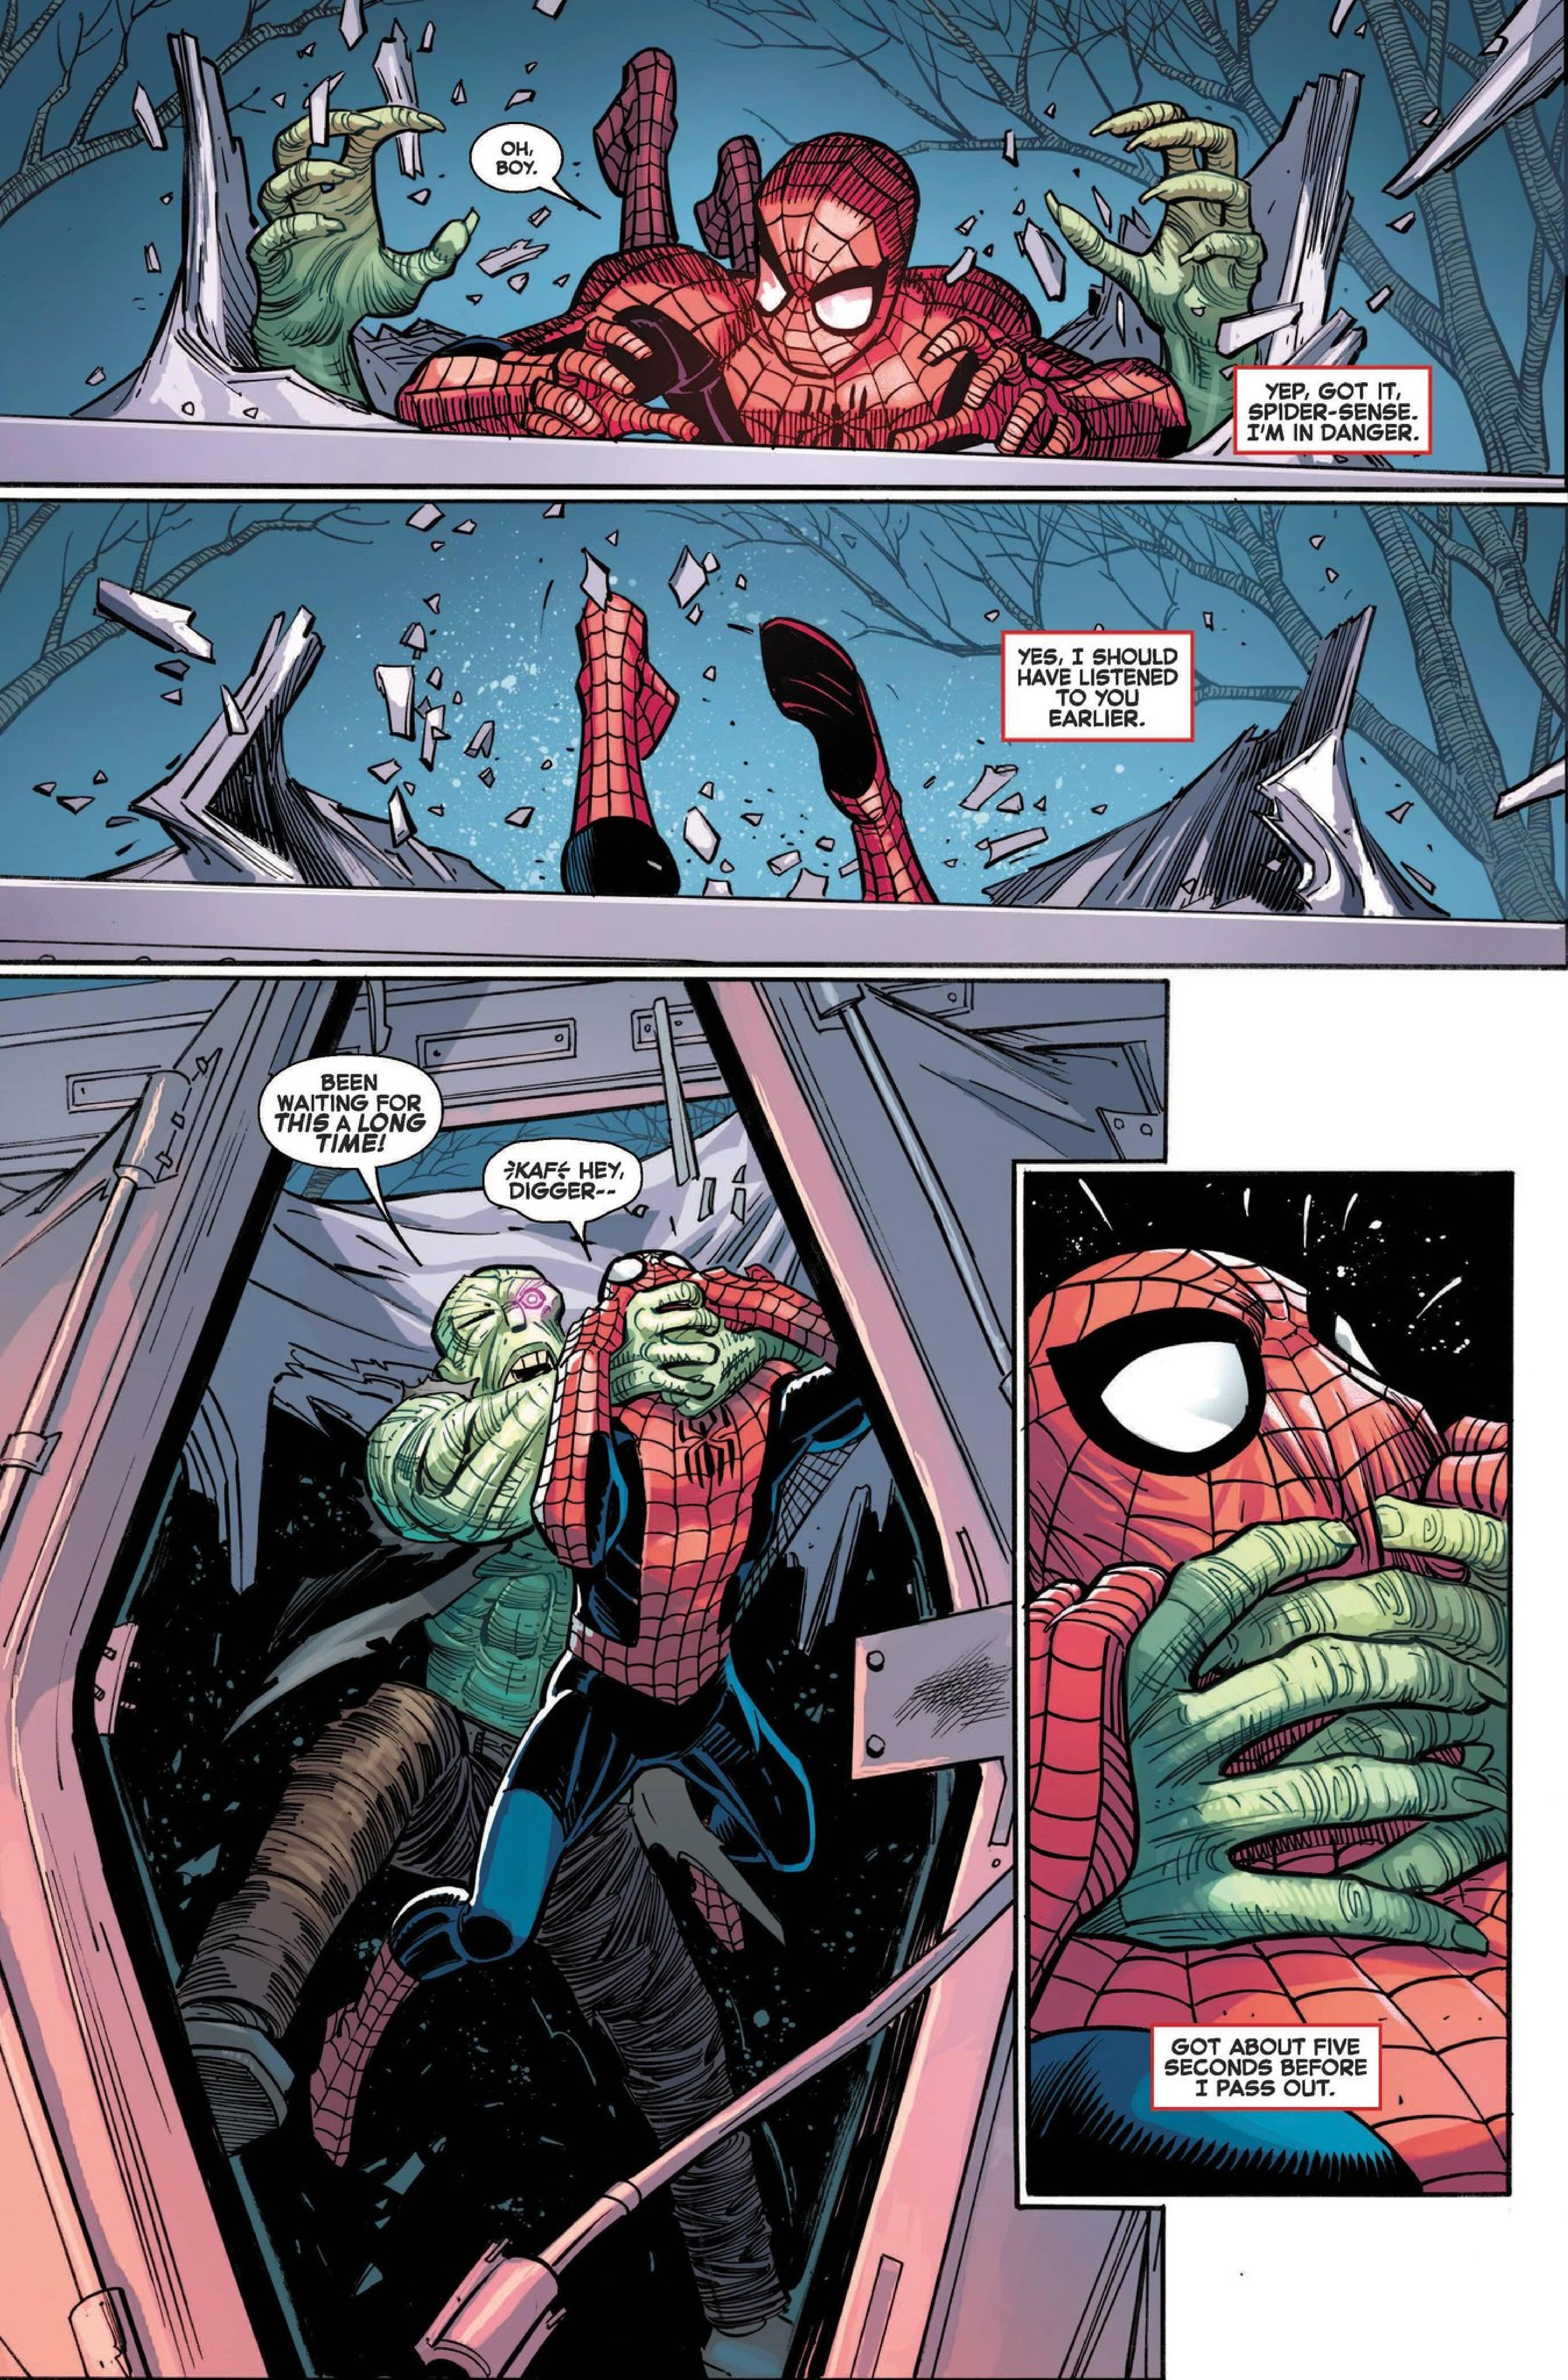 Amazing Spider-Man #1 Artgerm Virgin Variant (2022)